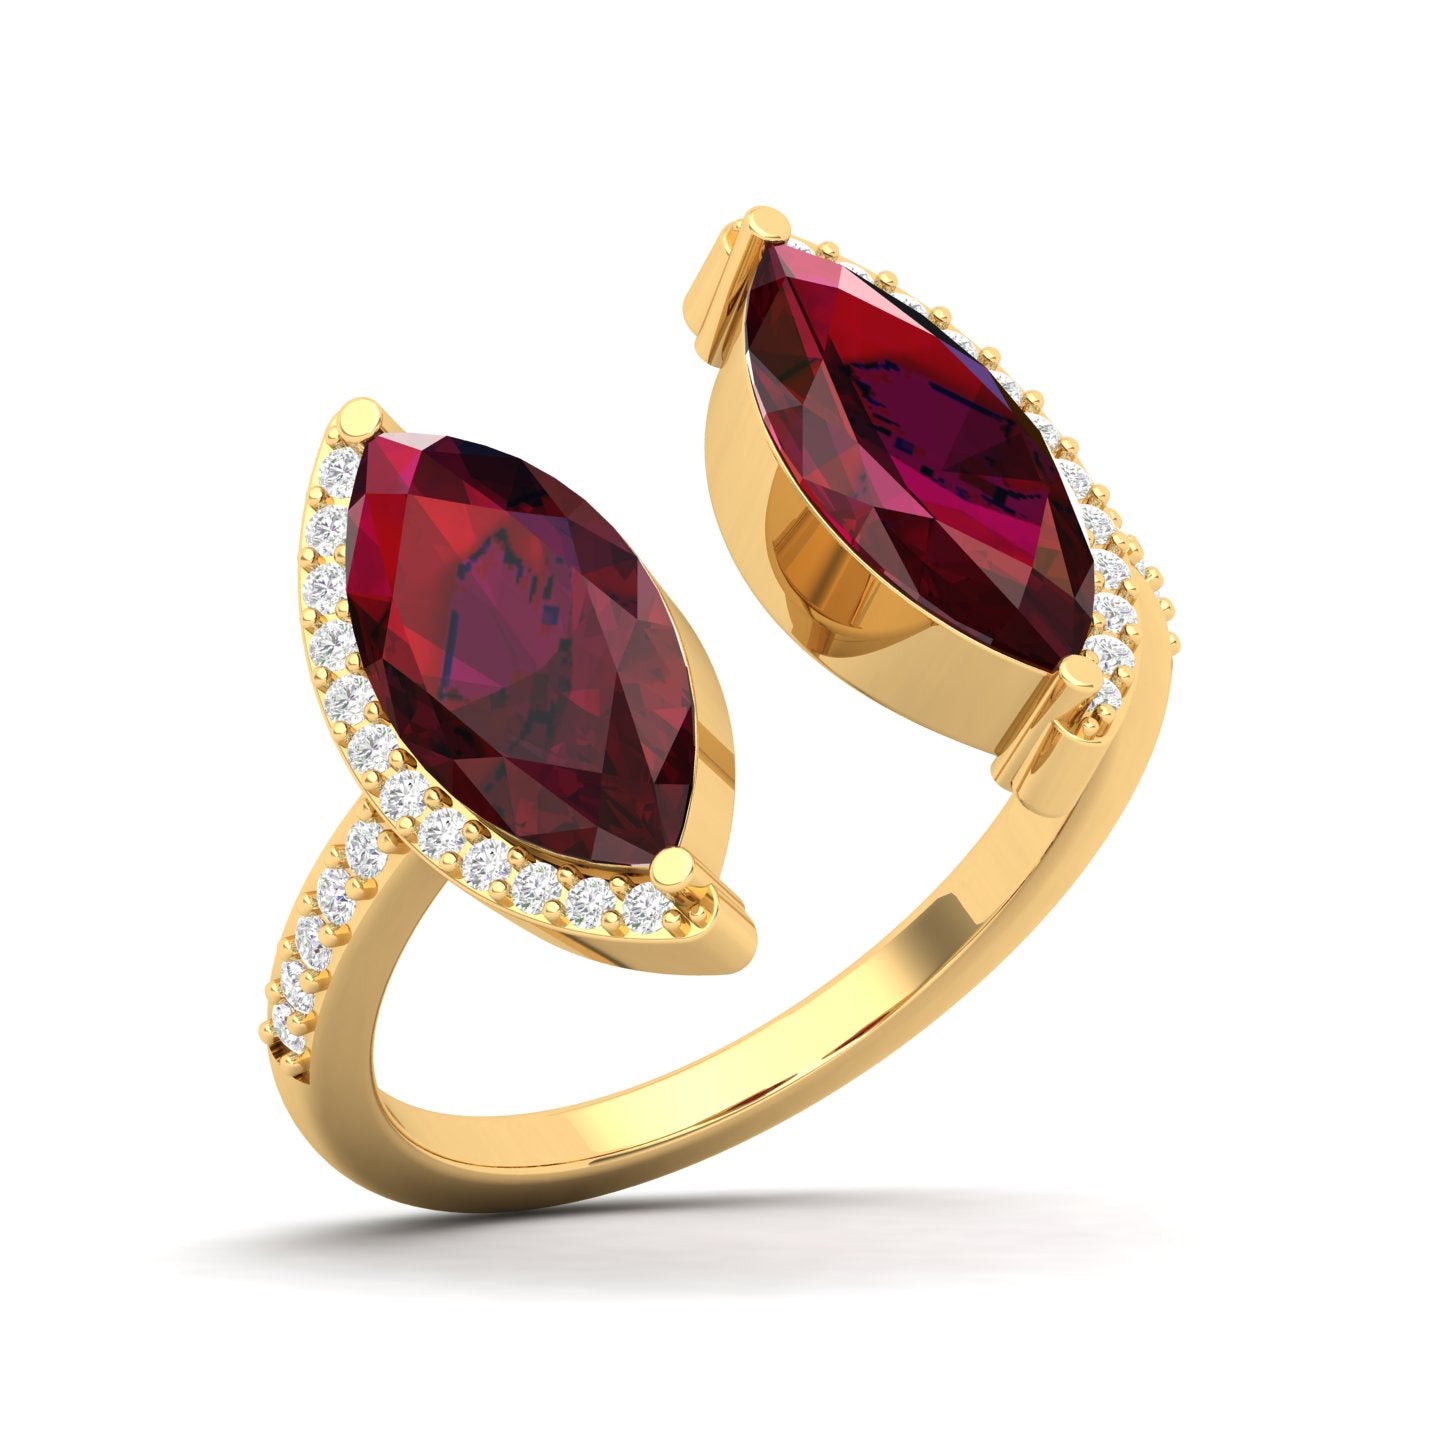 Maurya Nature Eyes Peridot Two Stone Engagement Ring with Accent Diamond